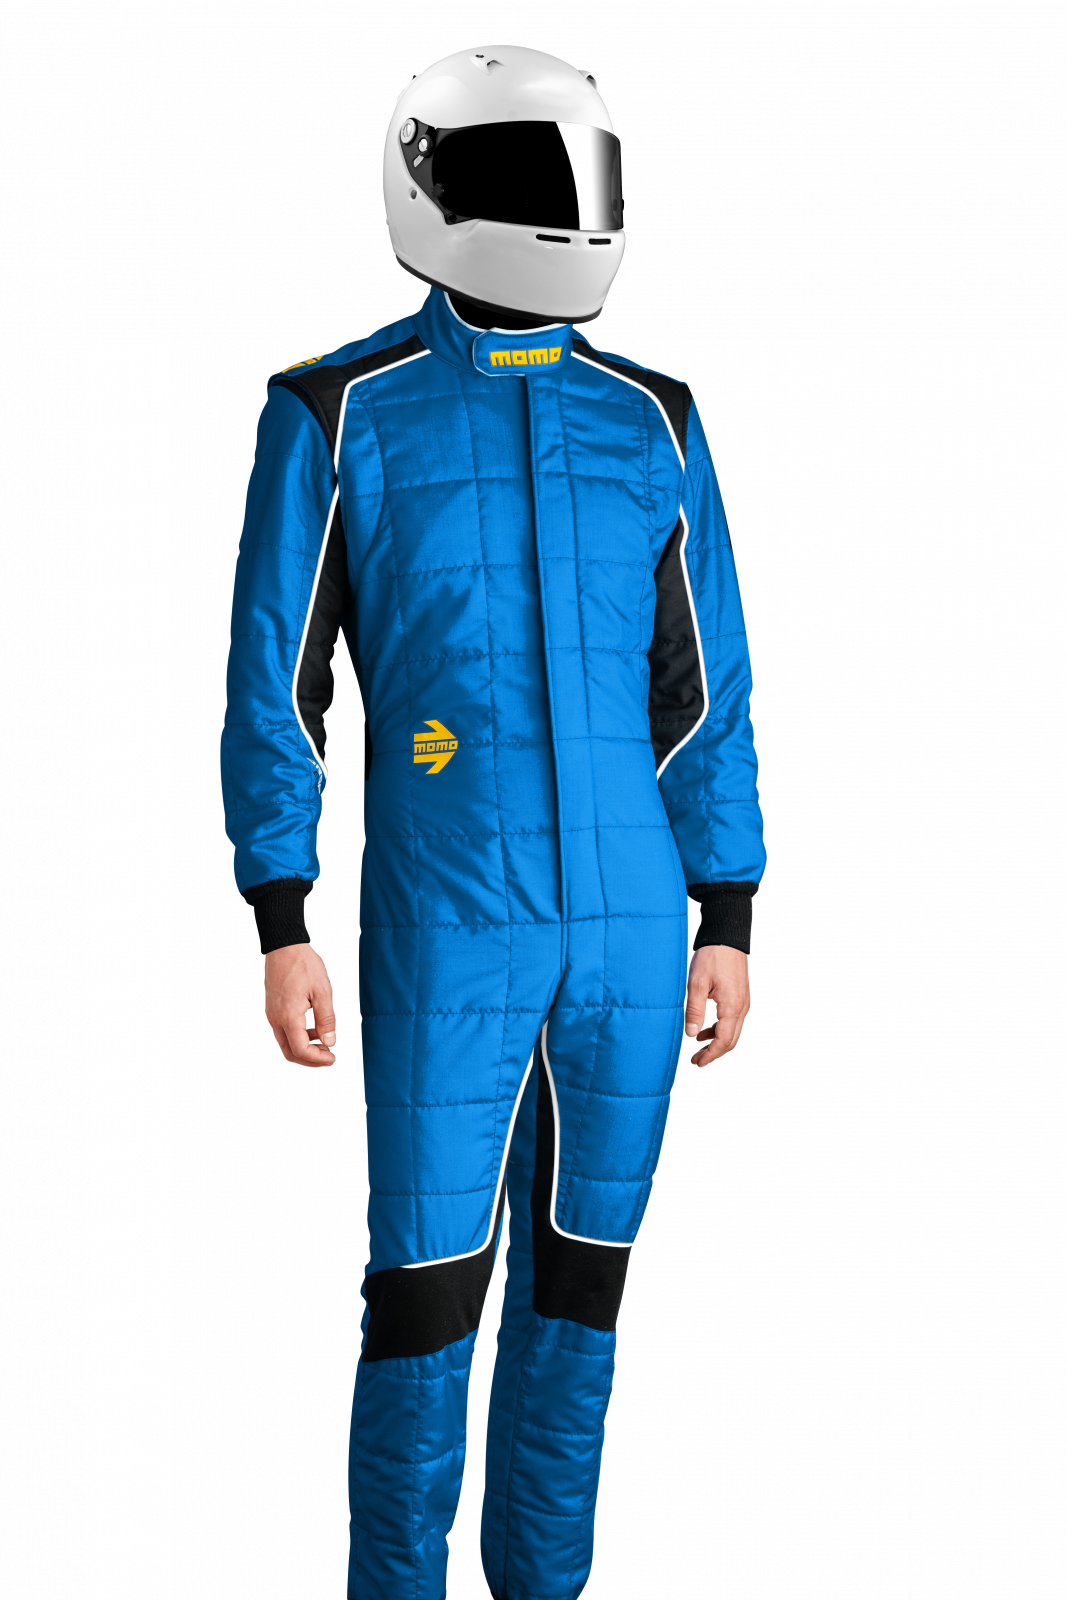 MOMO Corsa Evo Blue Size 50 Racing Suit TUCOEVOBLU50